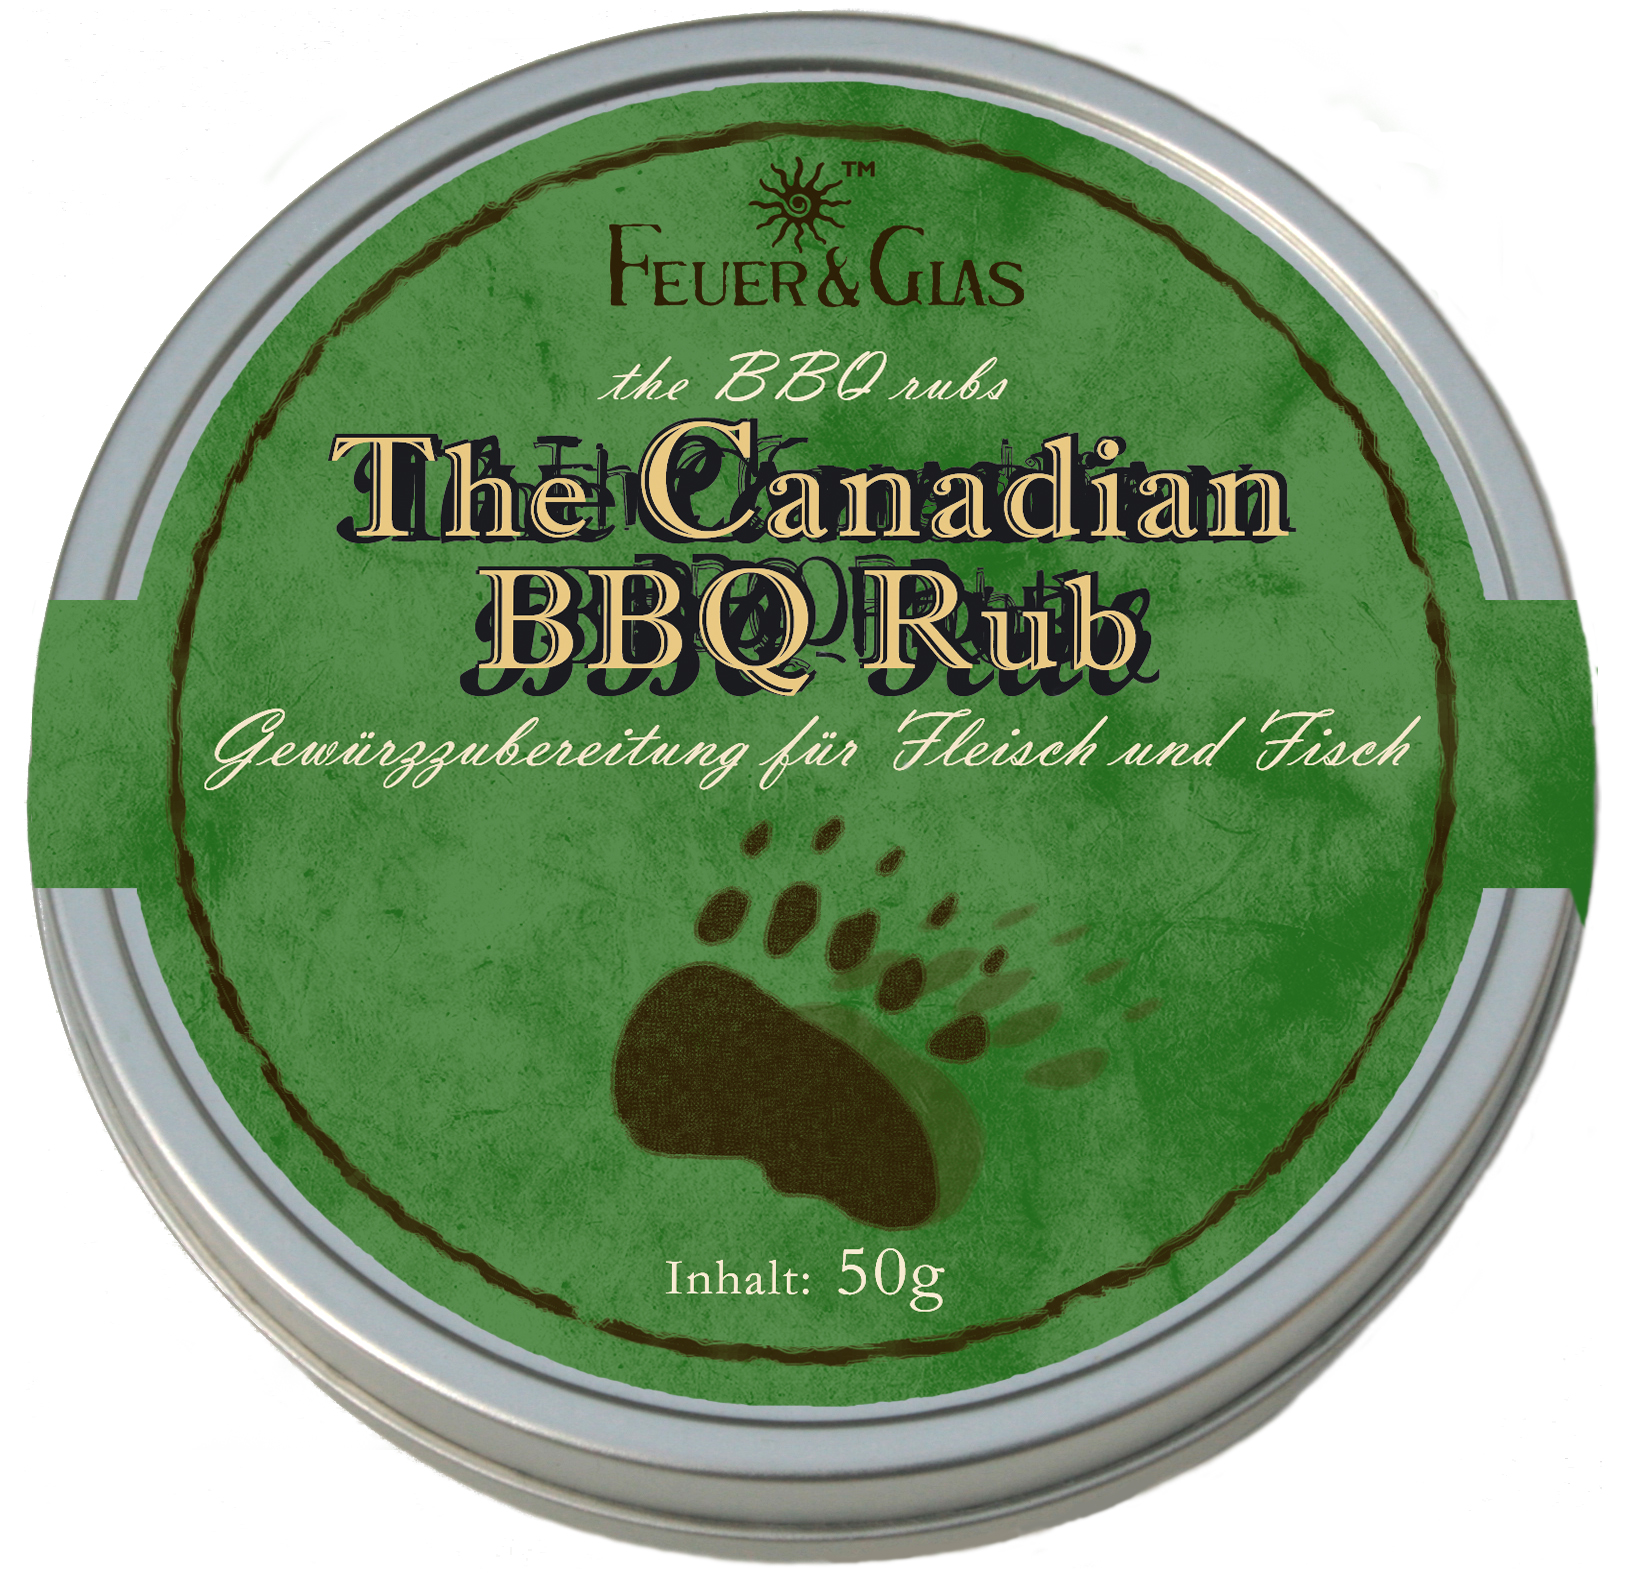 The Canadian BBQ Rub